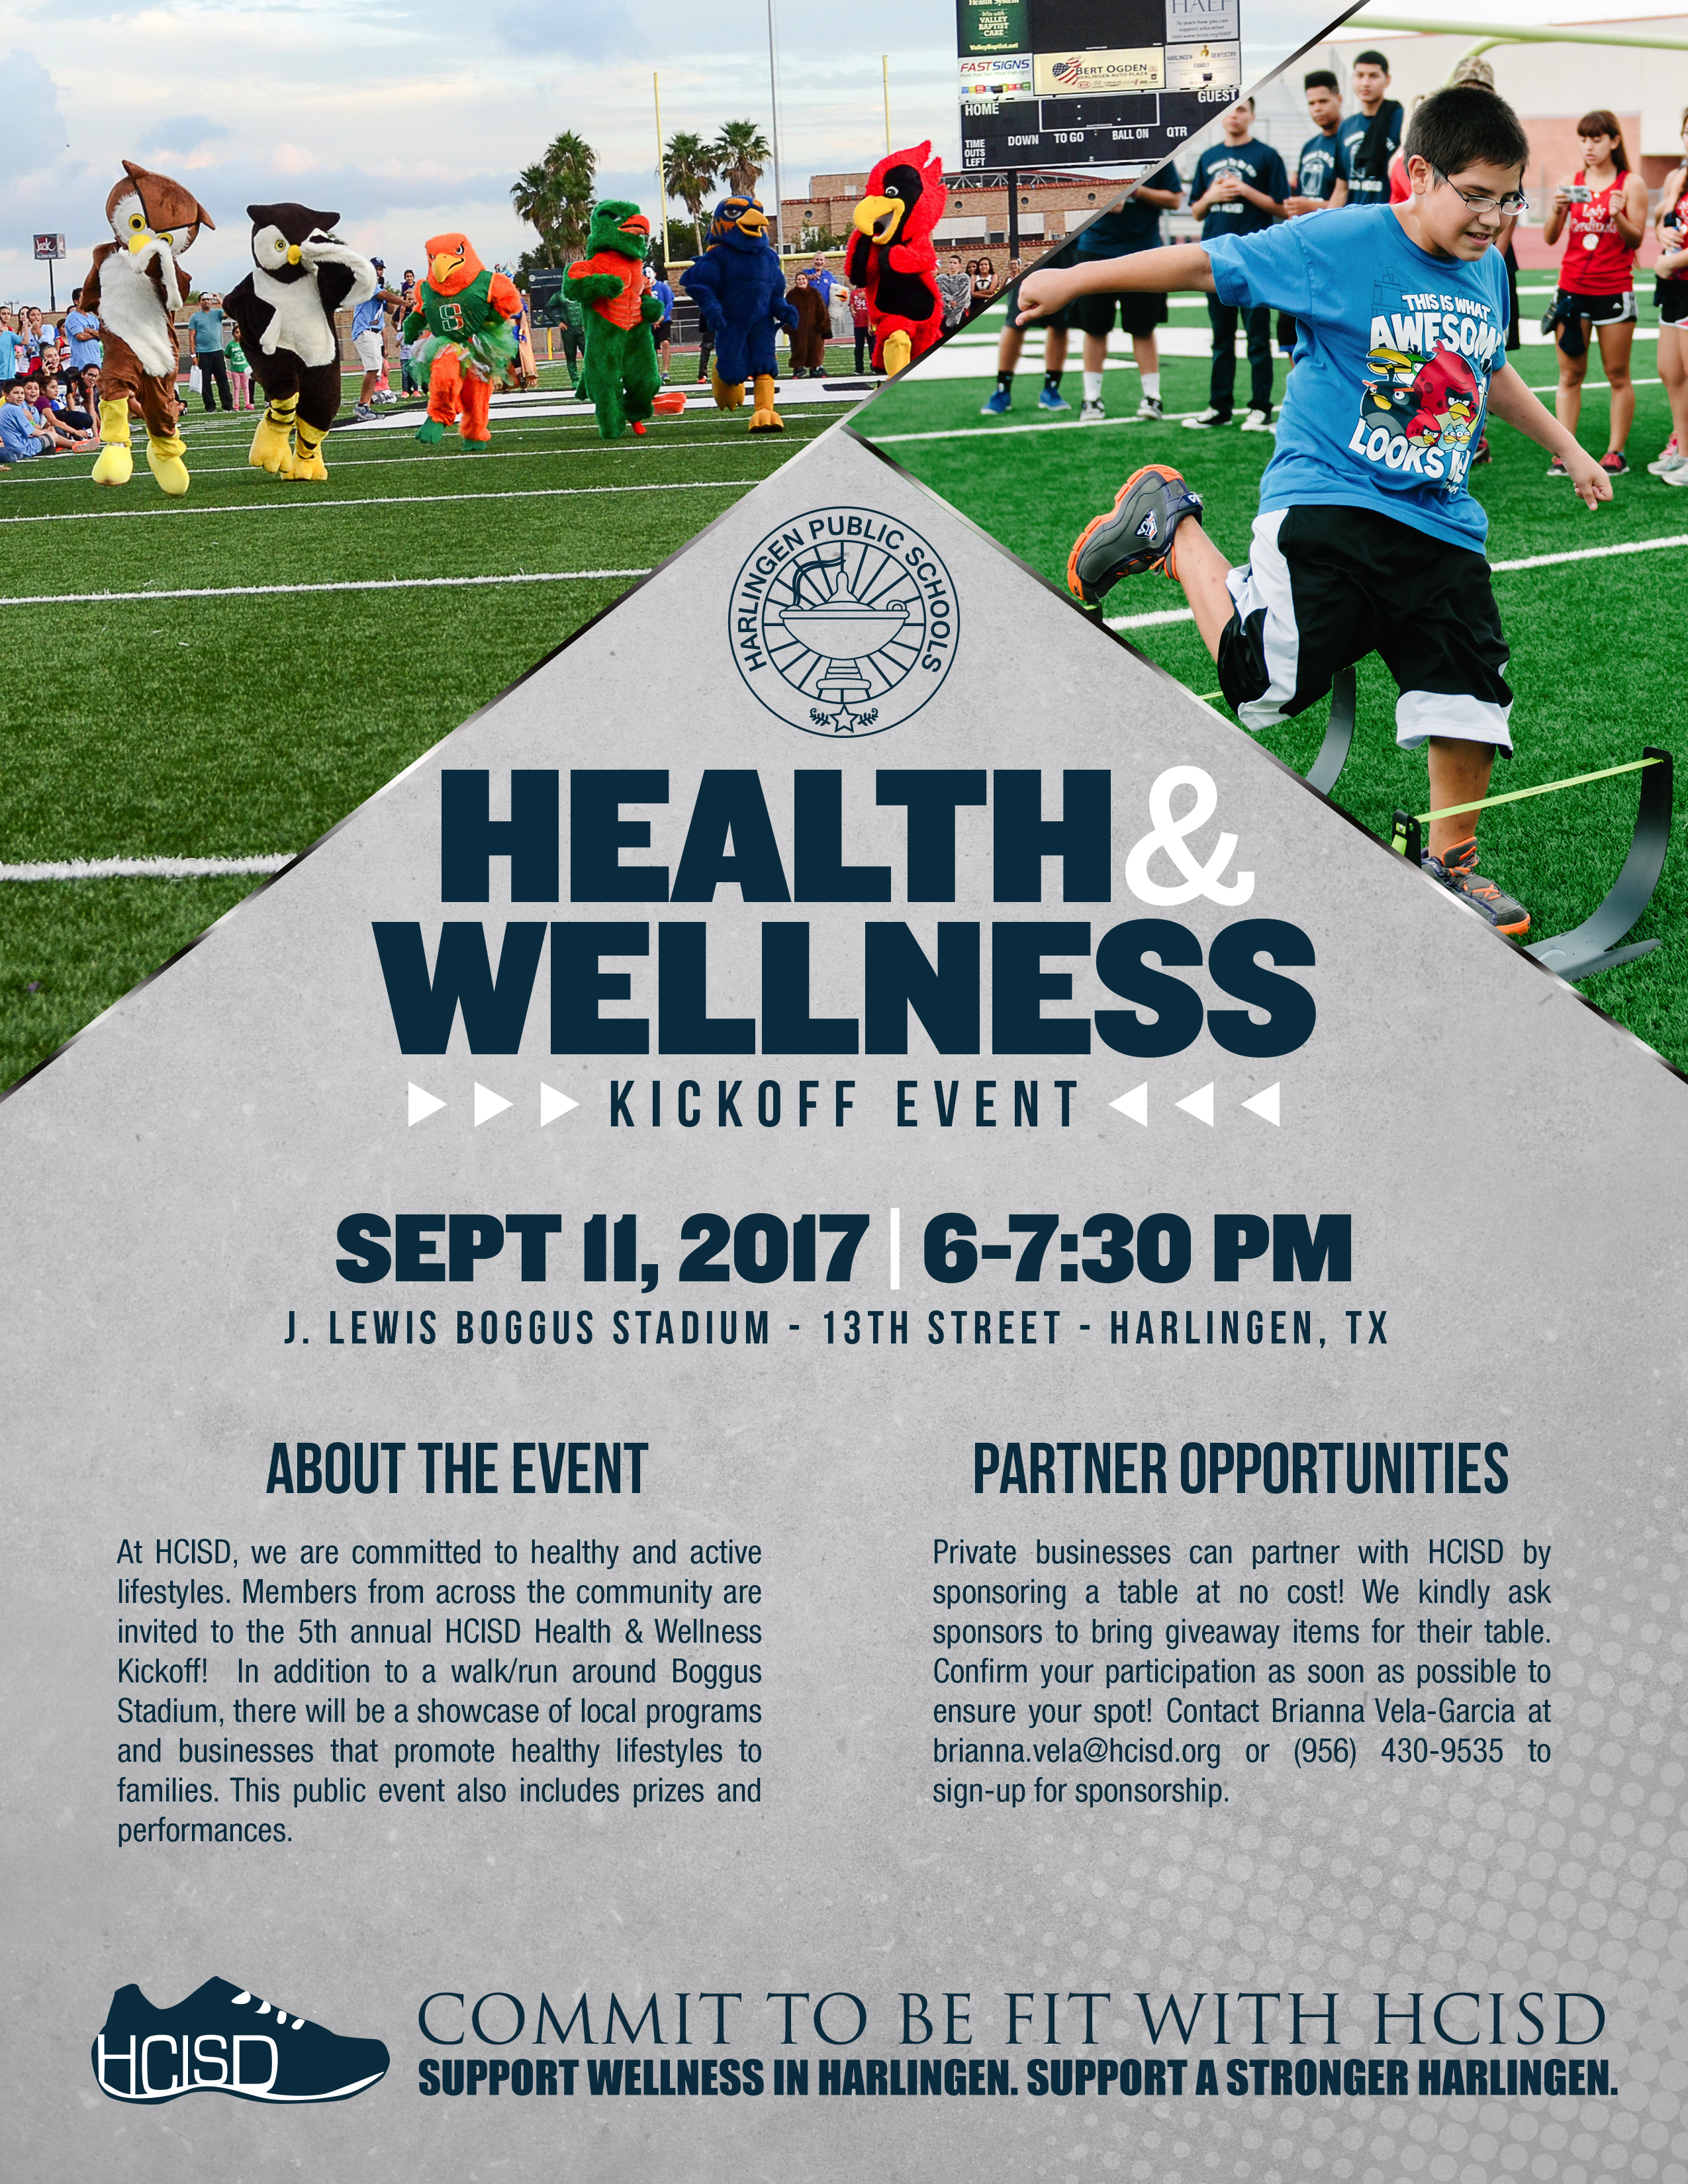 HCISD invites the community to Health & Wellness Kickoff